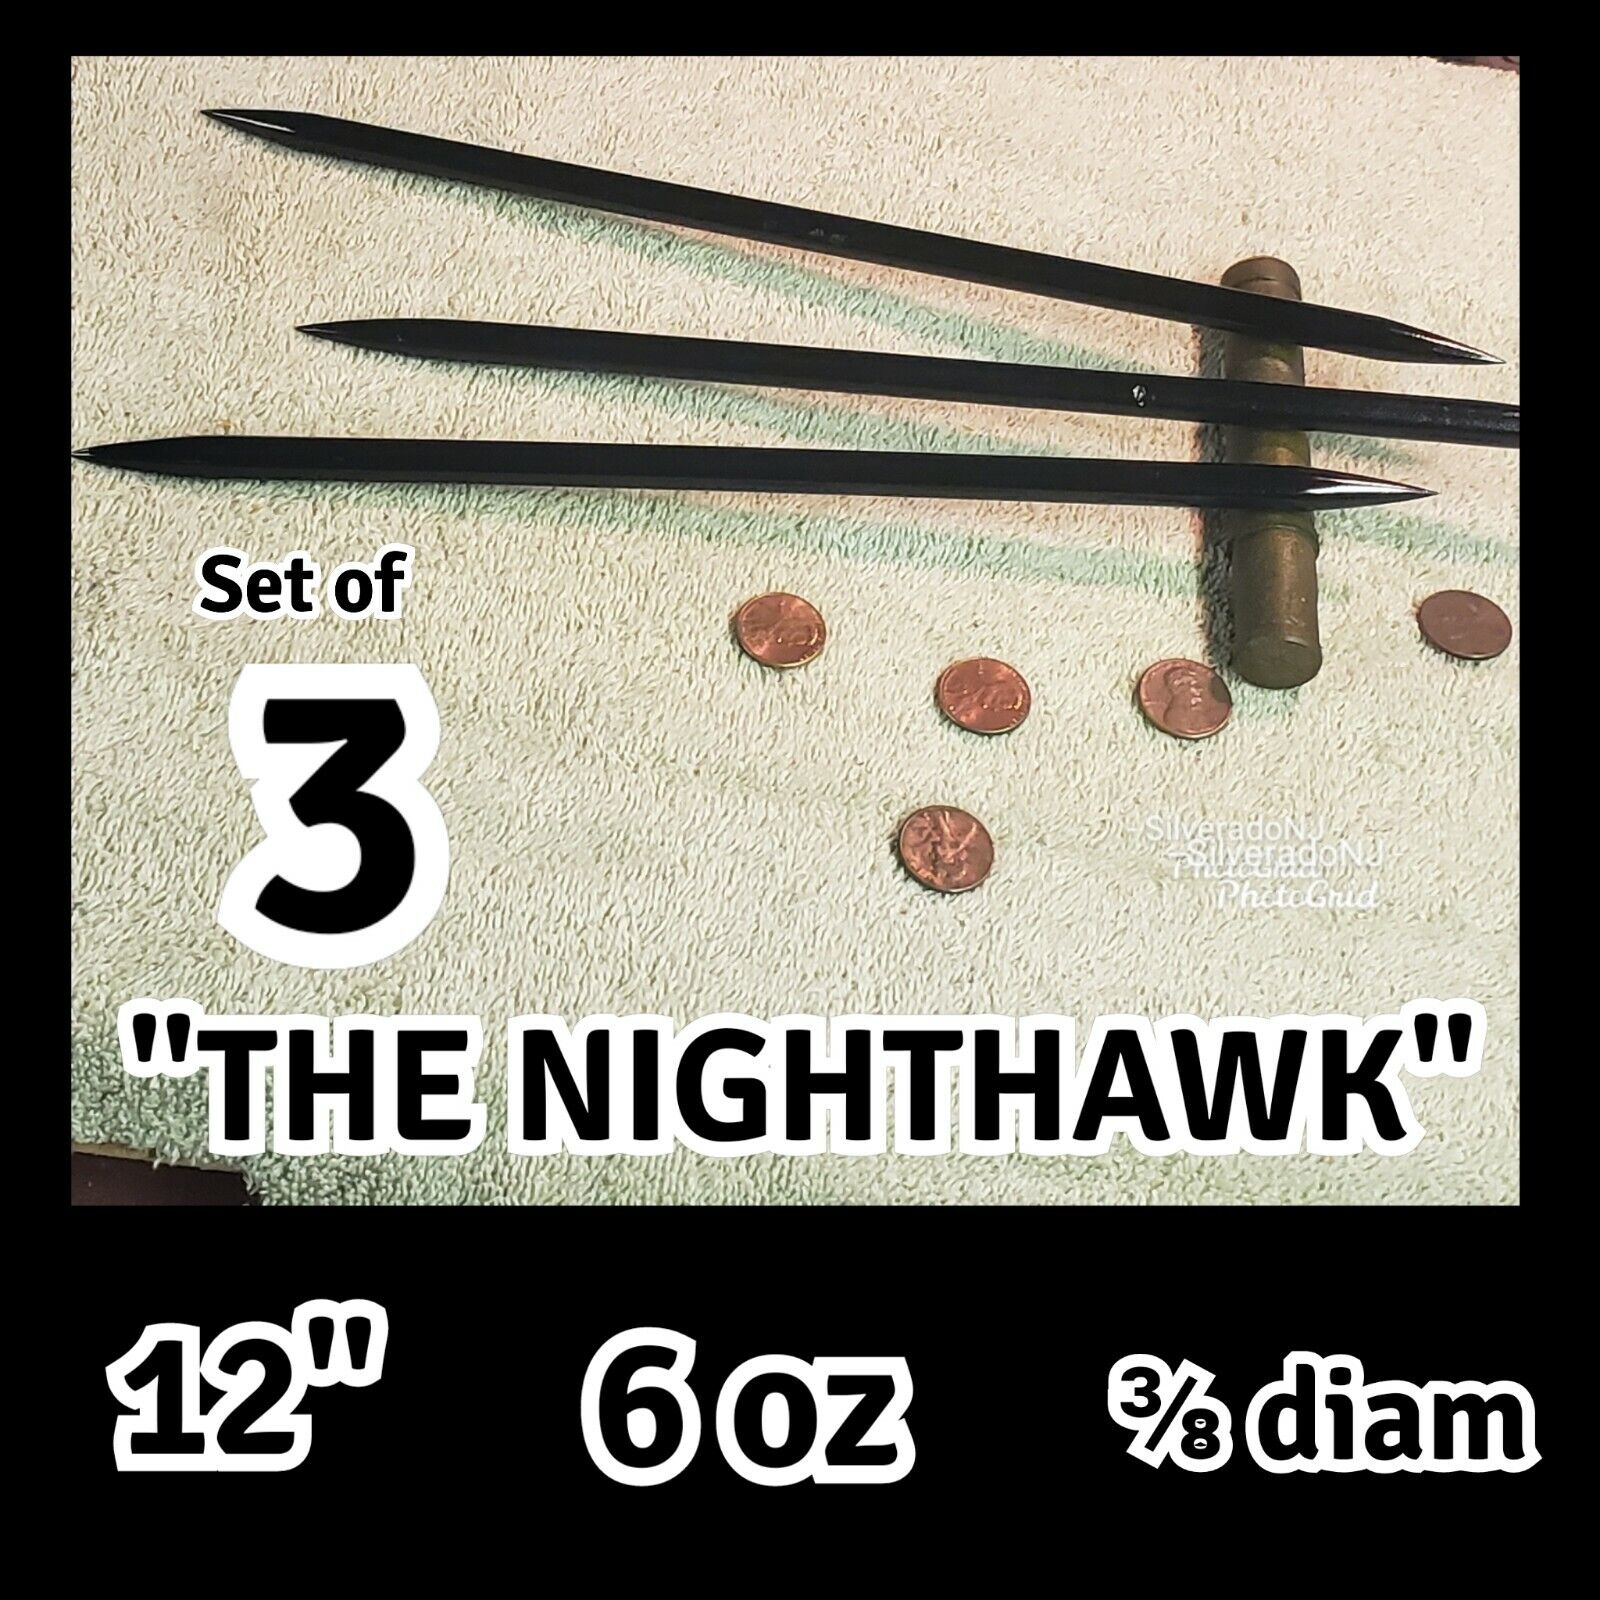 (3) "THE NIGHTHAWK" STEEL NINJA DOUBLE SPEAR TIP TORPEDO THROWING  SPIKE SET